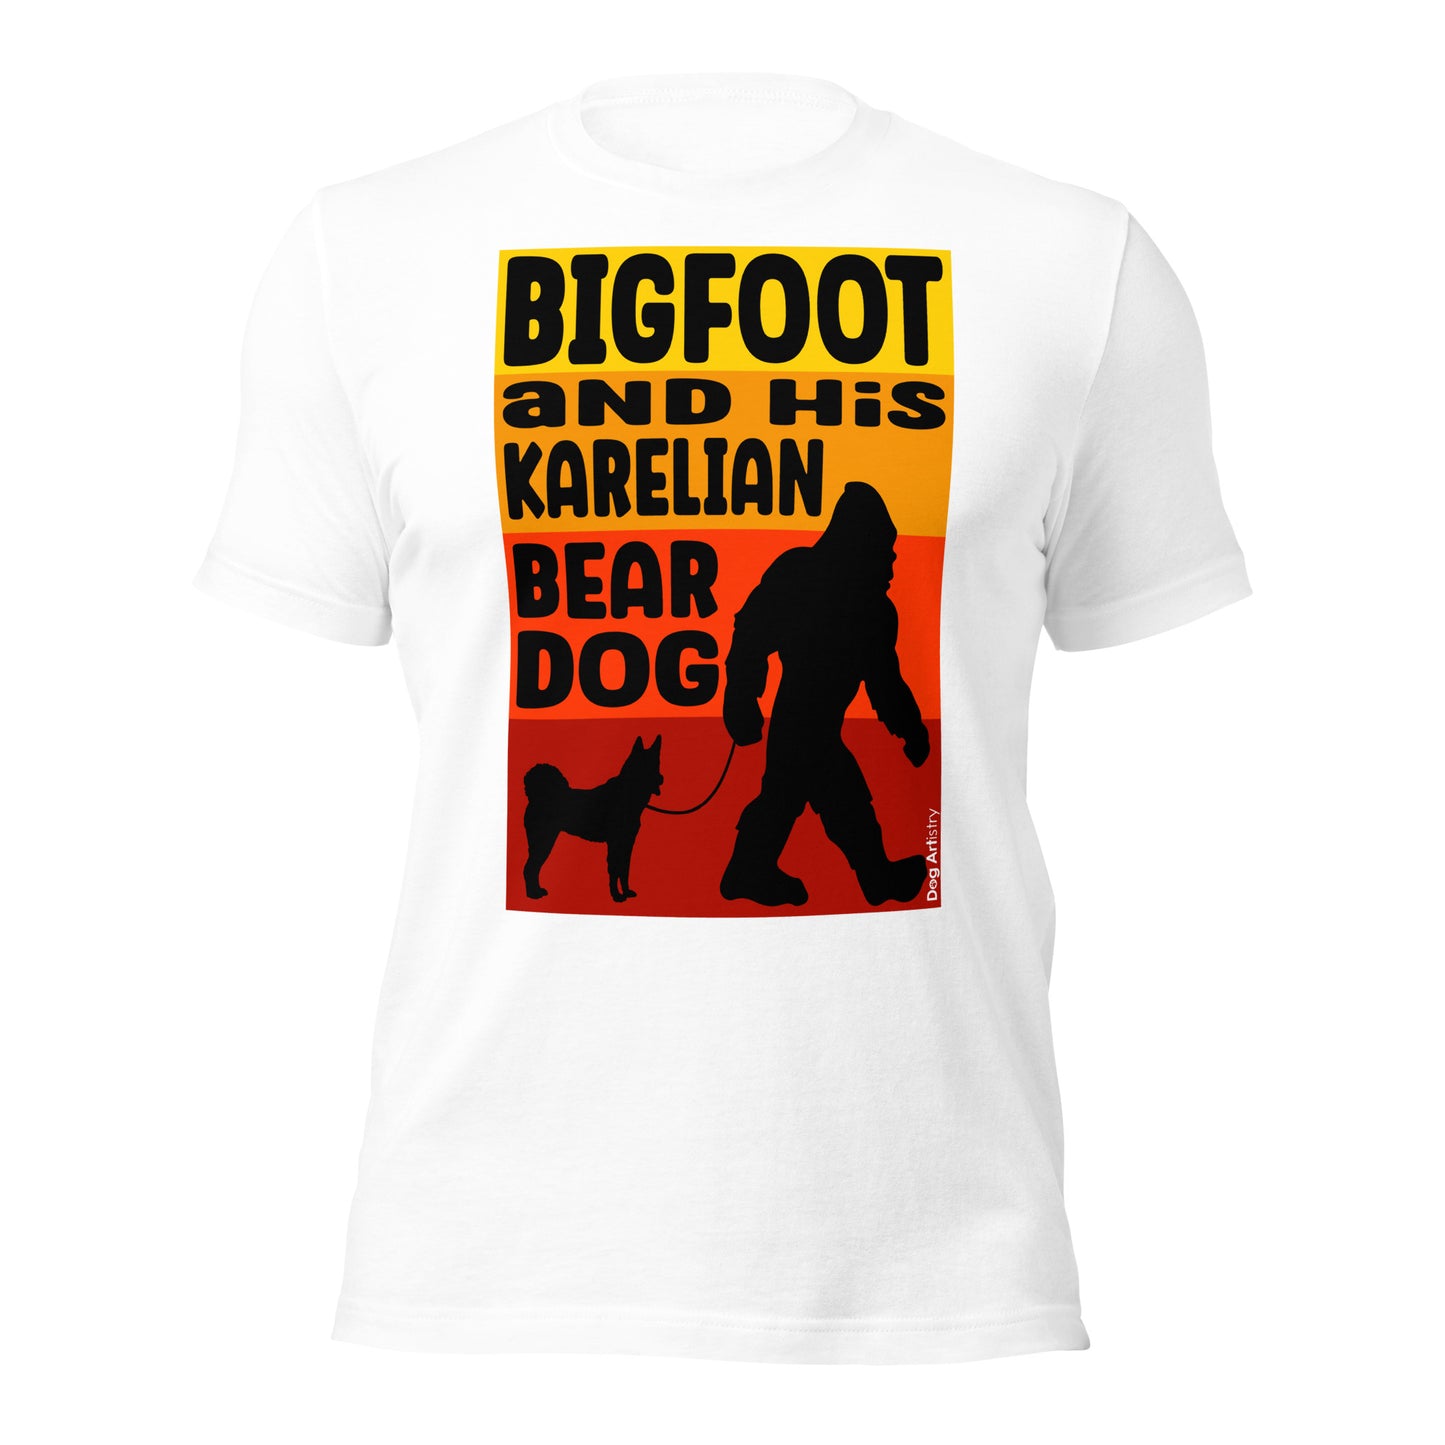 Bigfoot and his Karelian bear dog unisex white t-shirt by Dog Artistry.